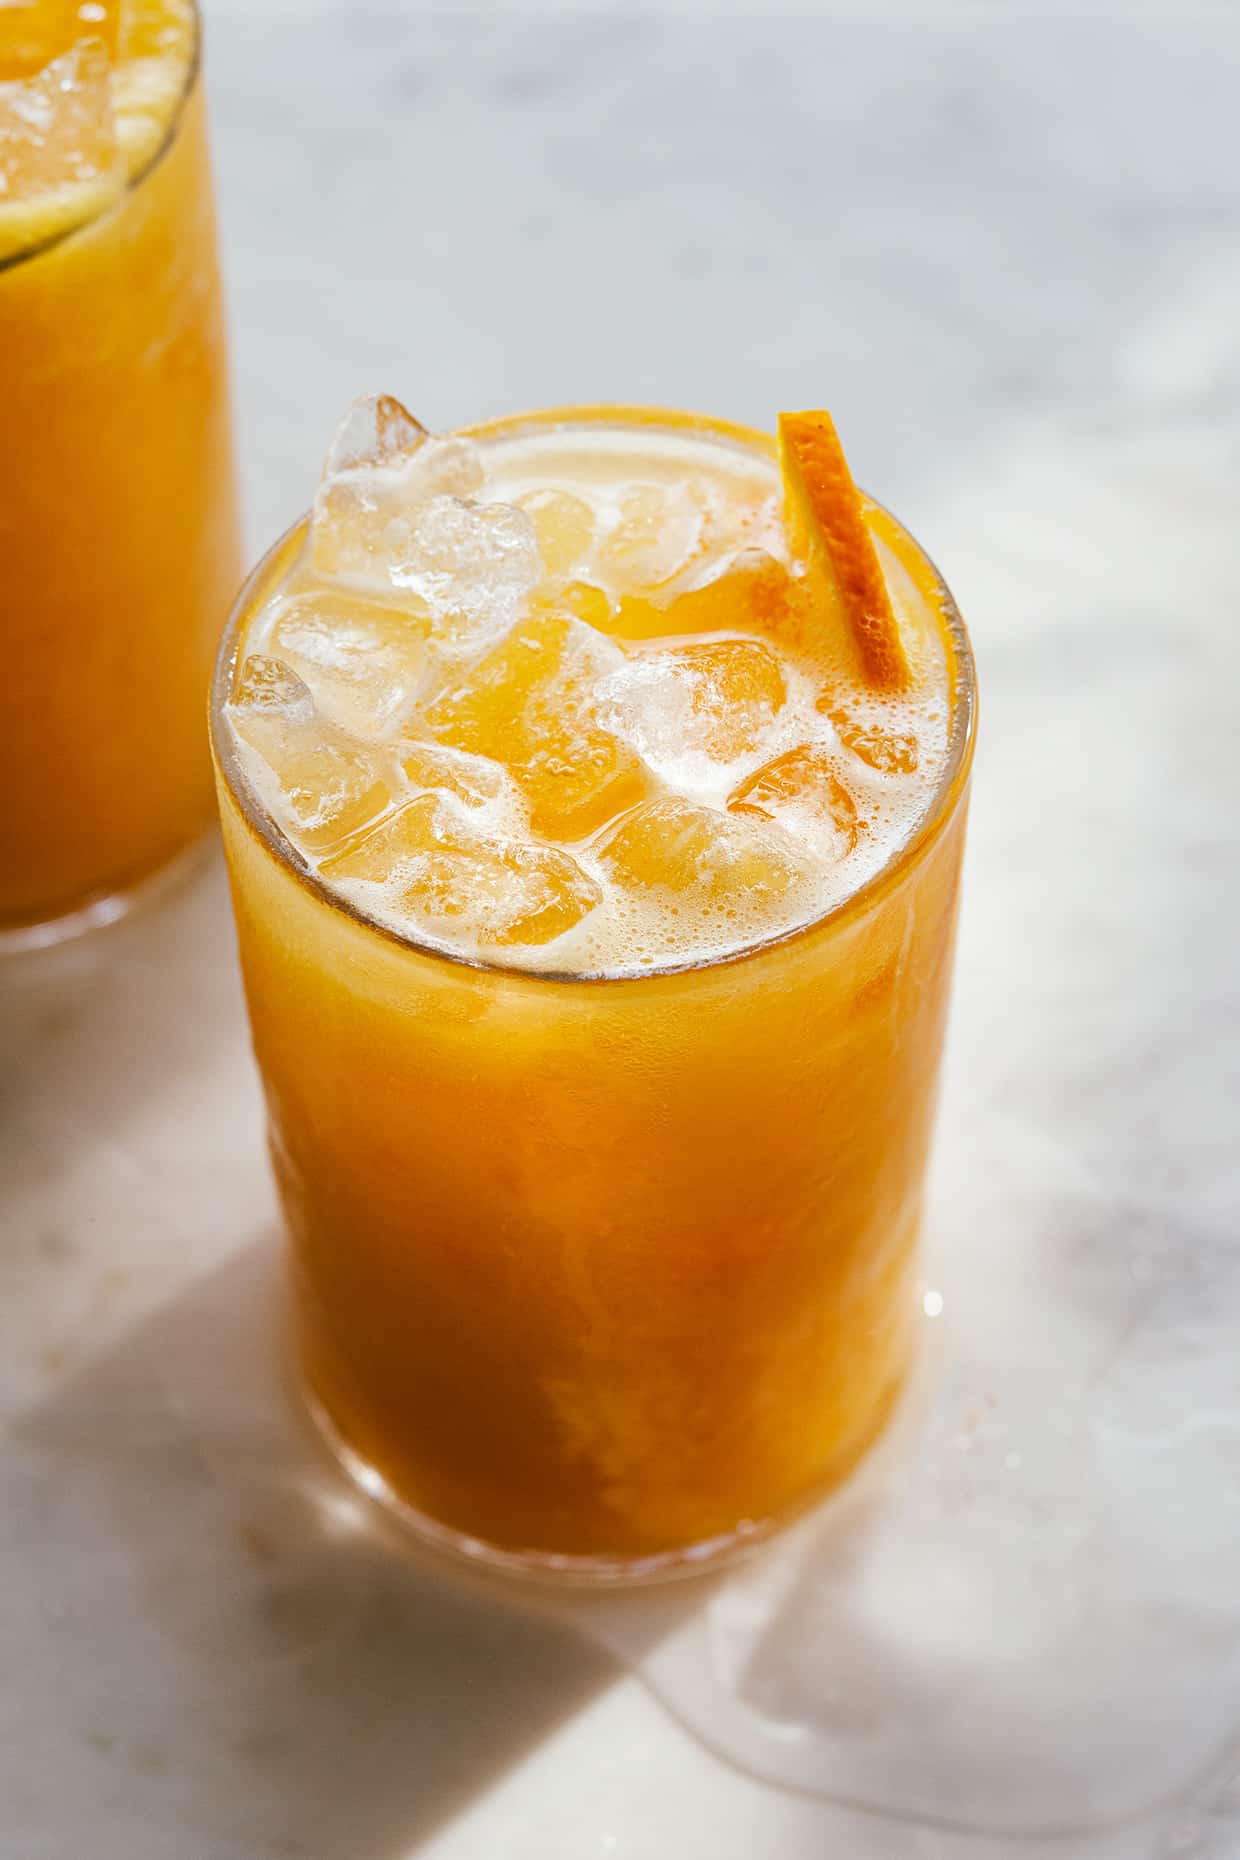 orange juice drink served over ice